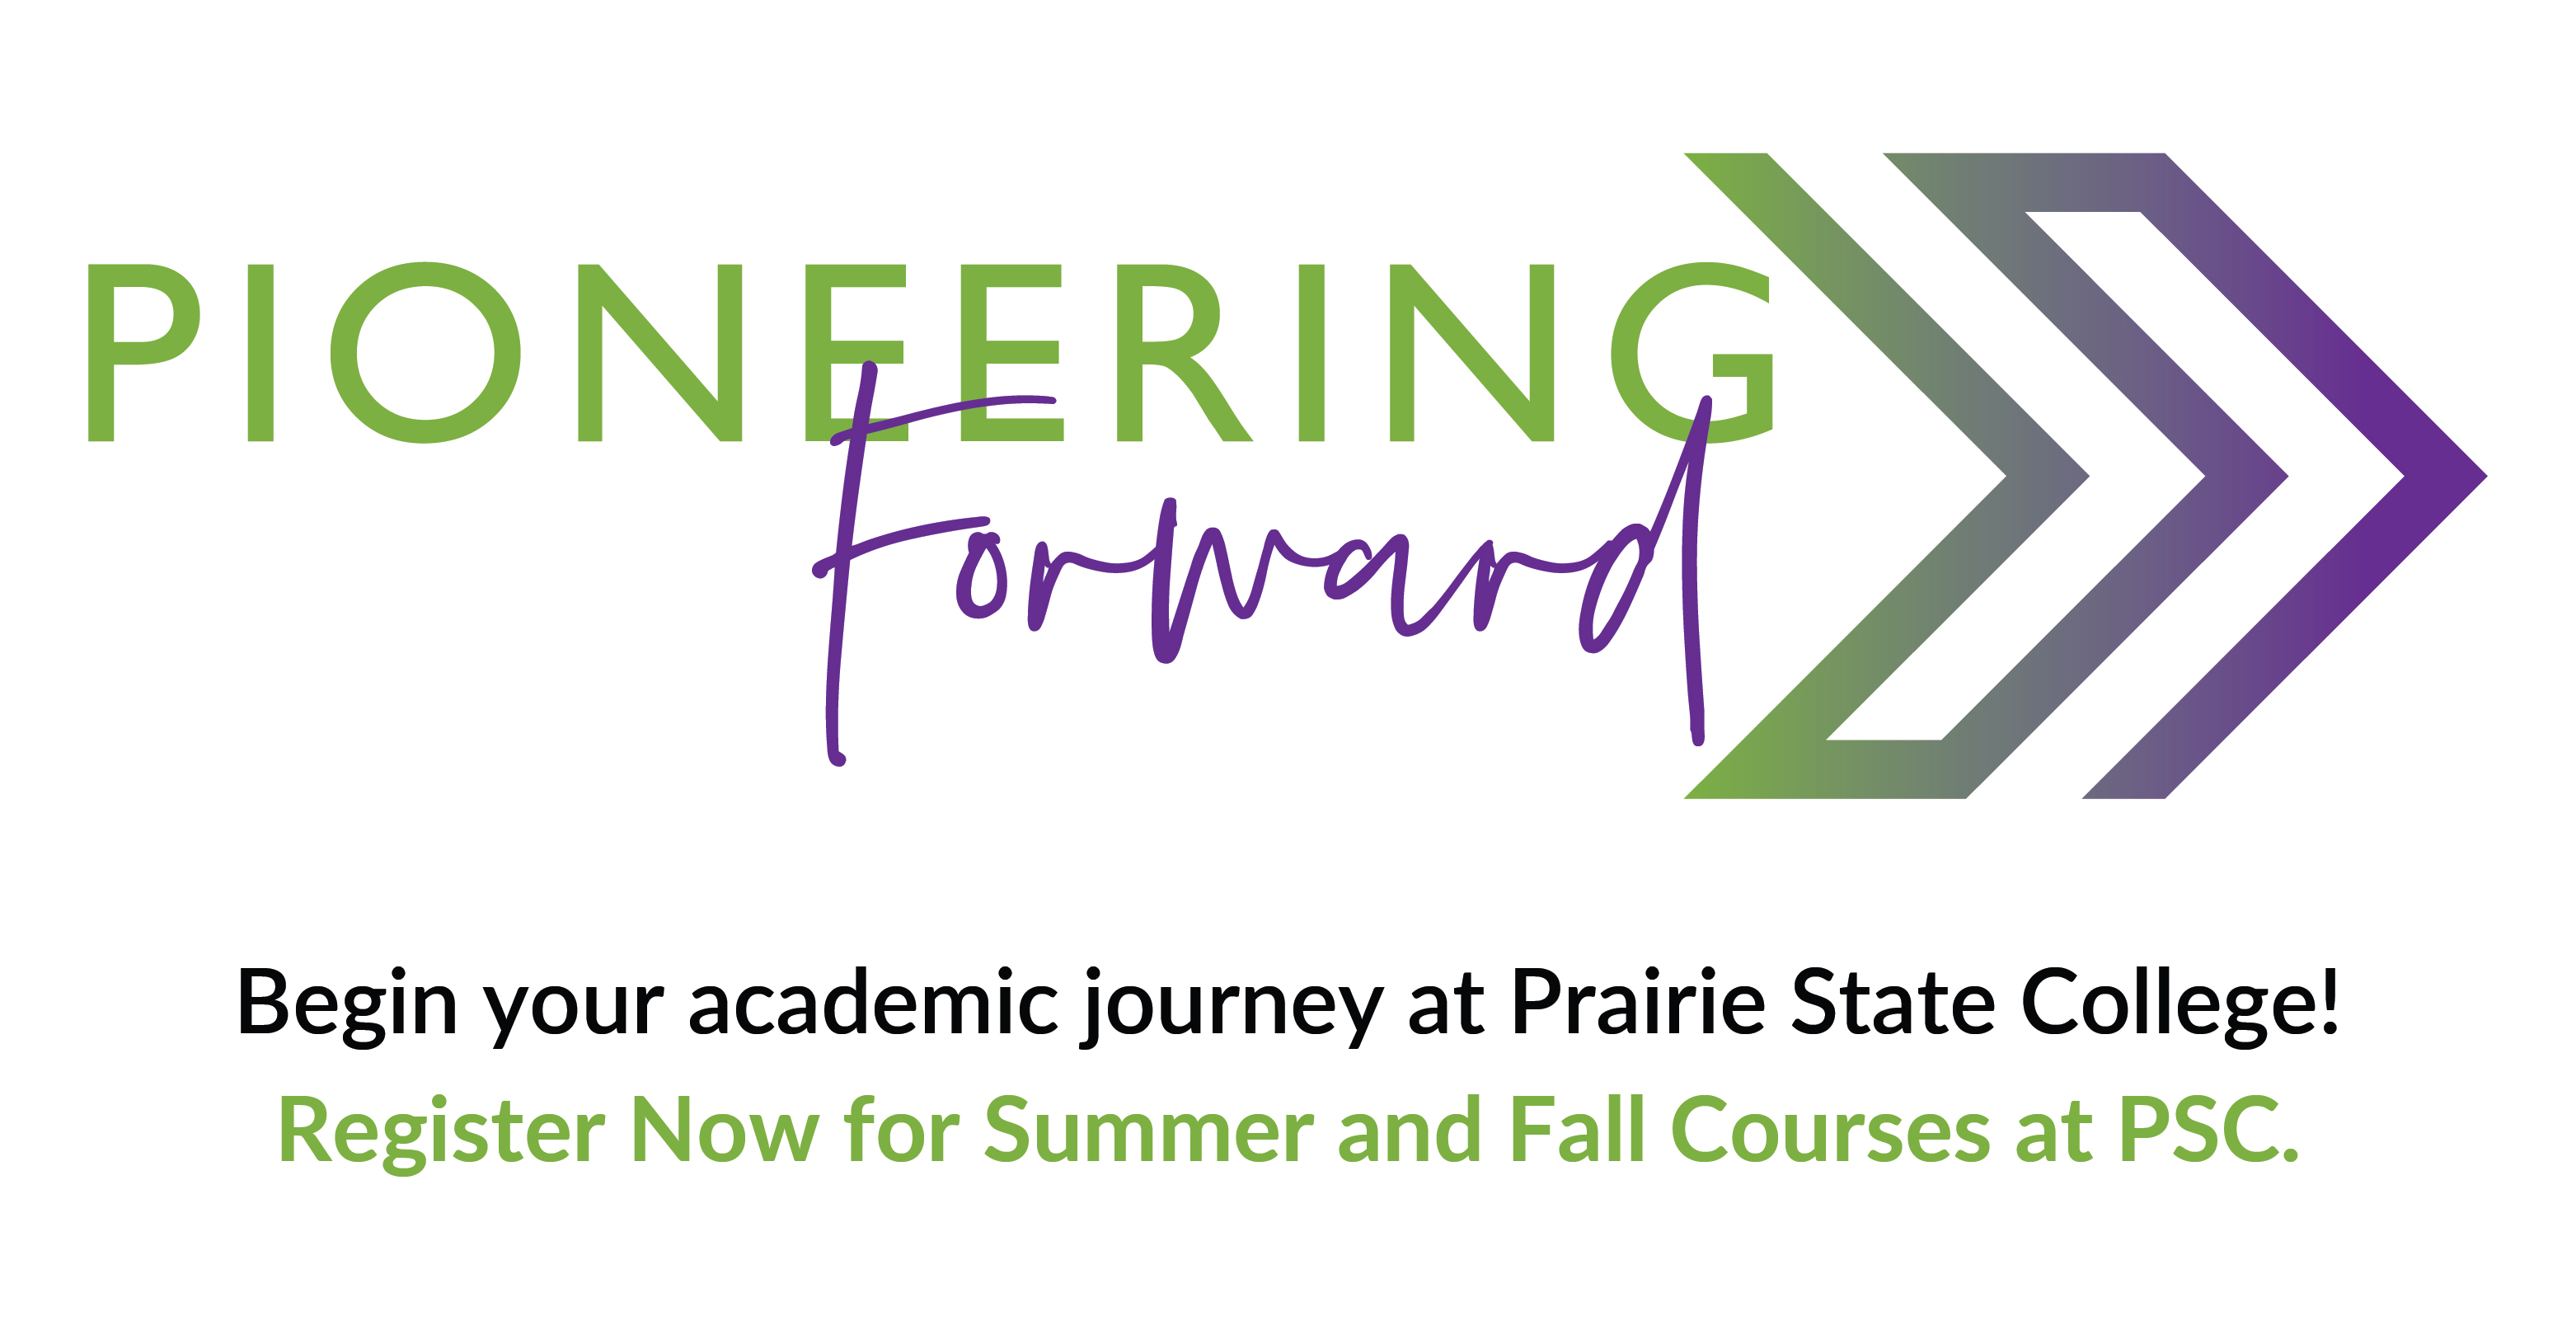 Pioneering Forward: Begin your academic journey at Prairie State College!